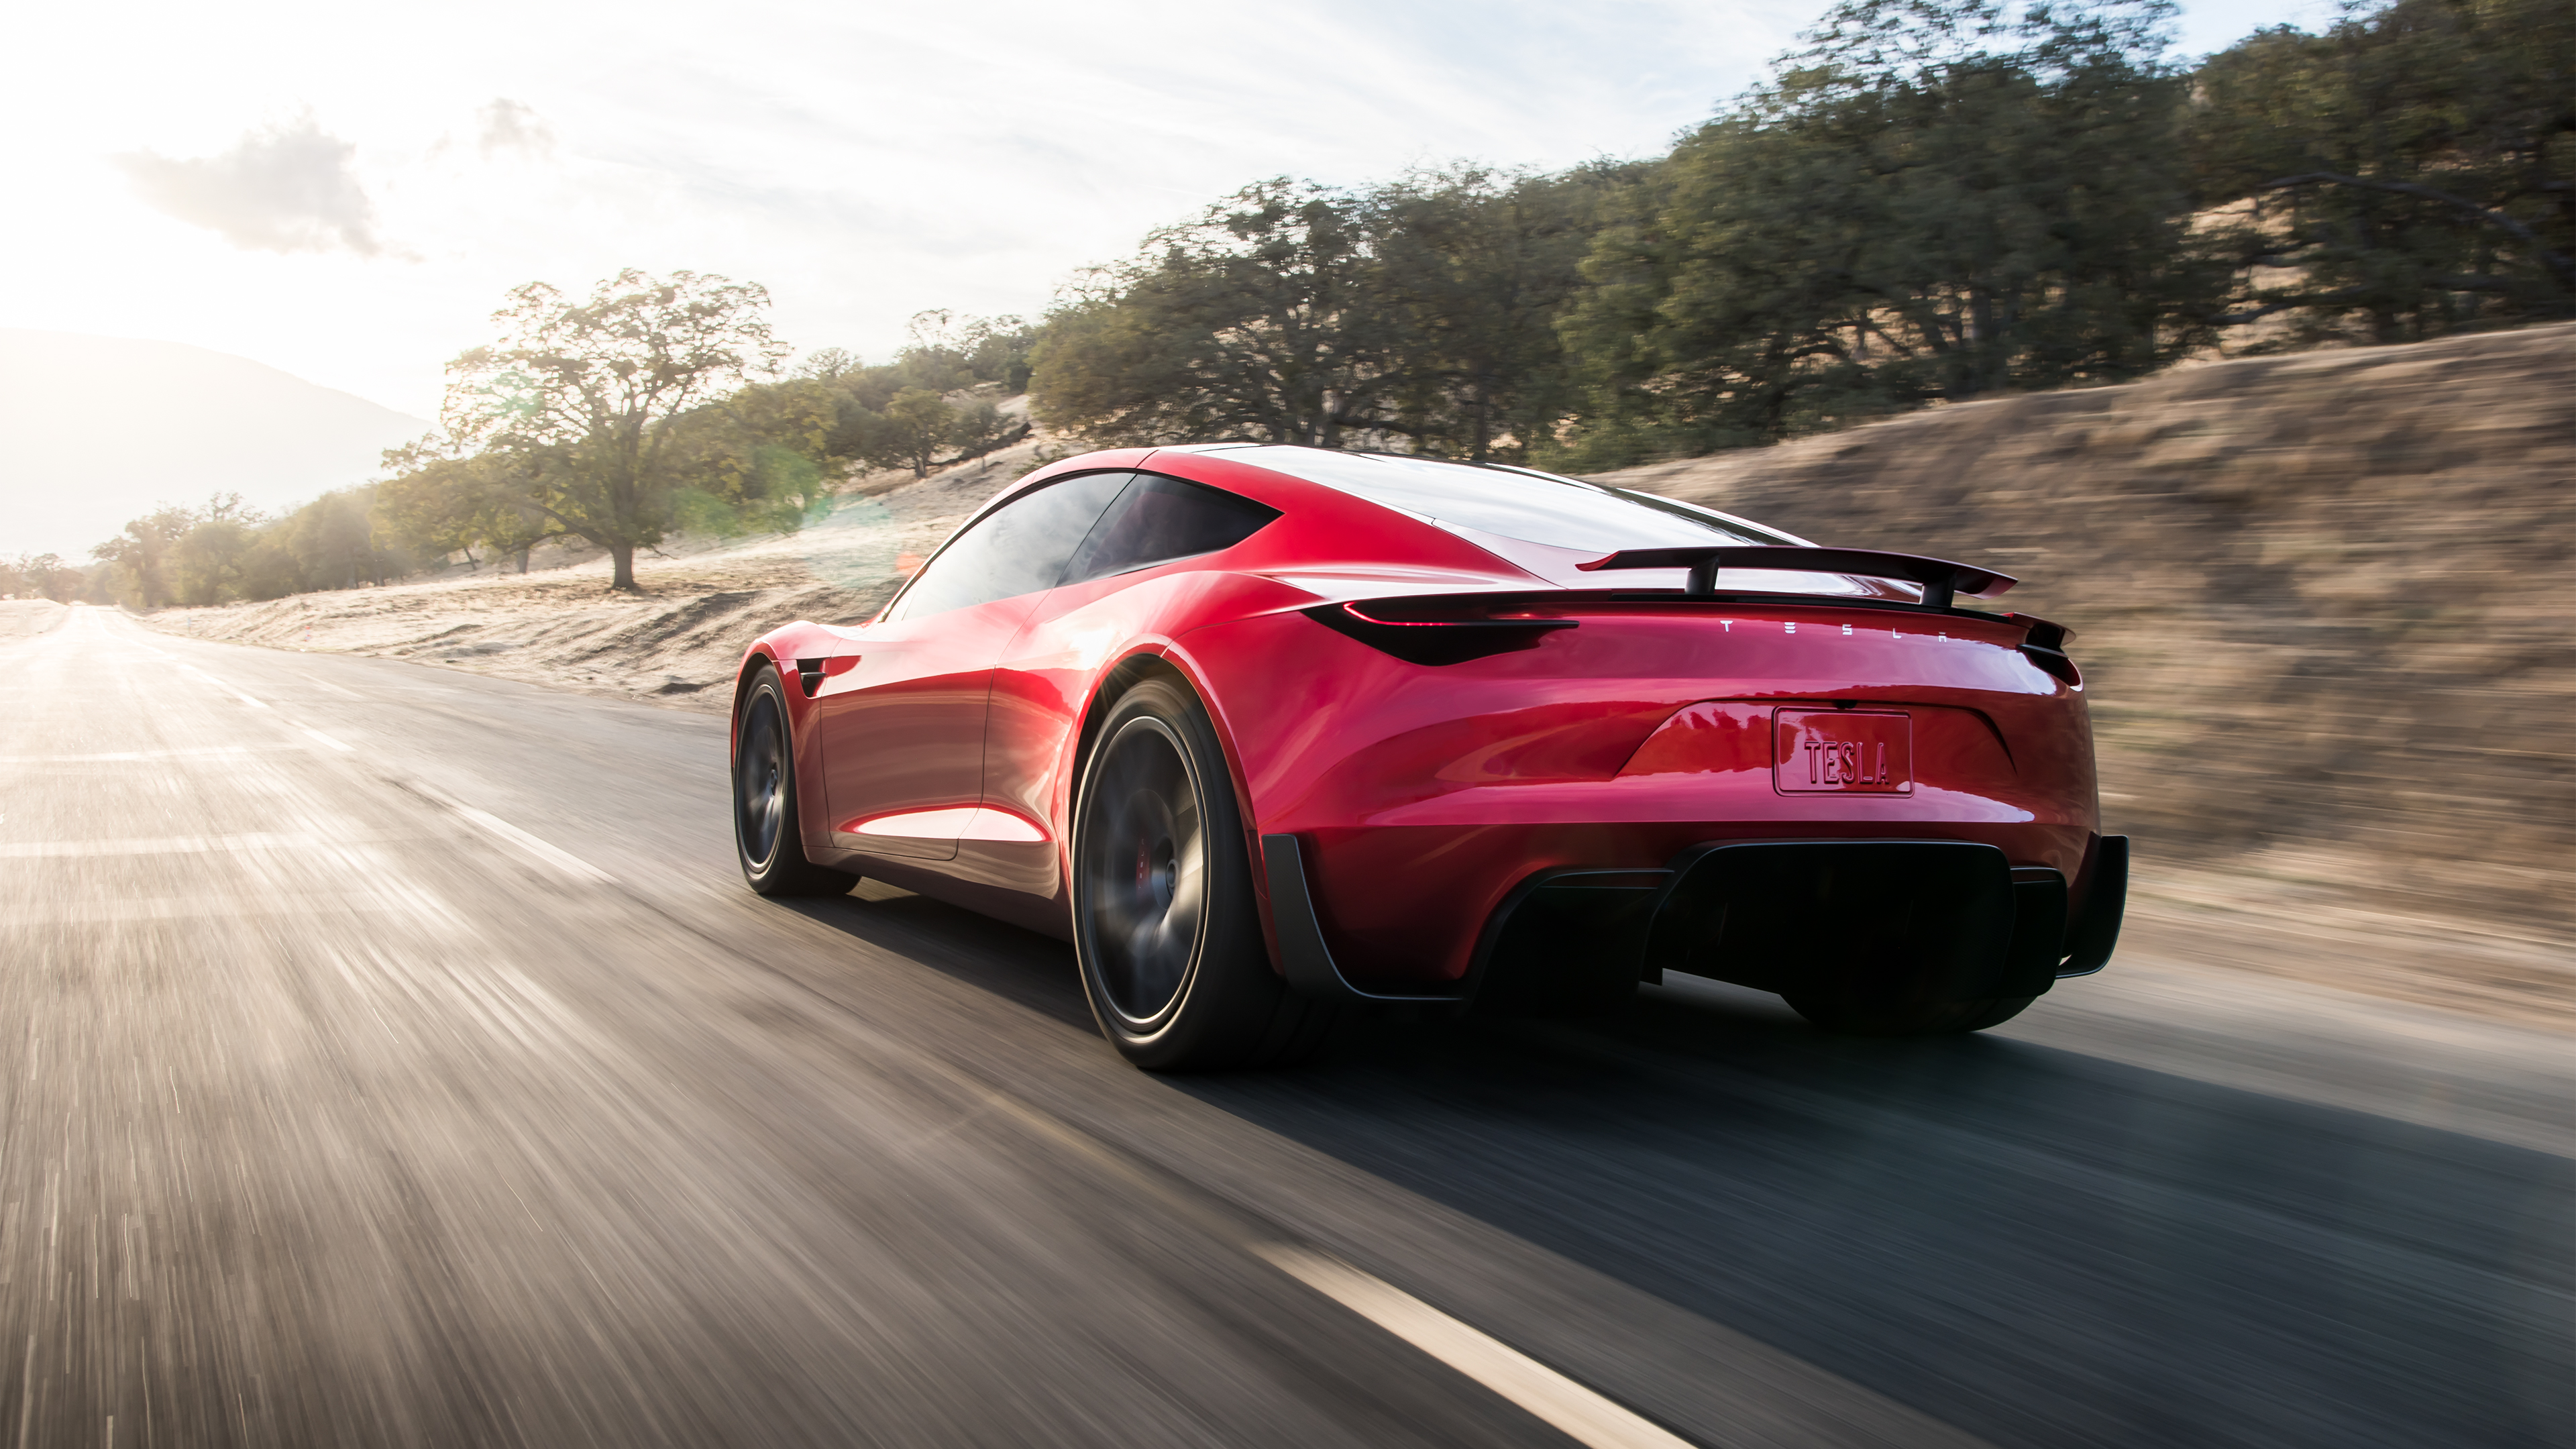 Permanent Renderen stortbui Tesla Roadster is 'embarrassing' us, says supercar maker Koenigsegg |  Electrek